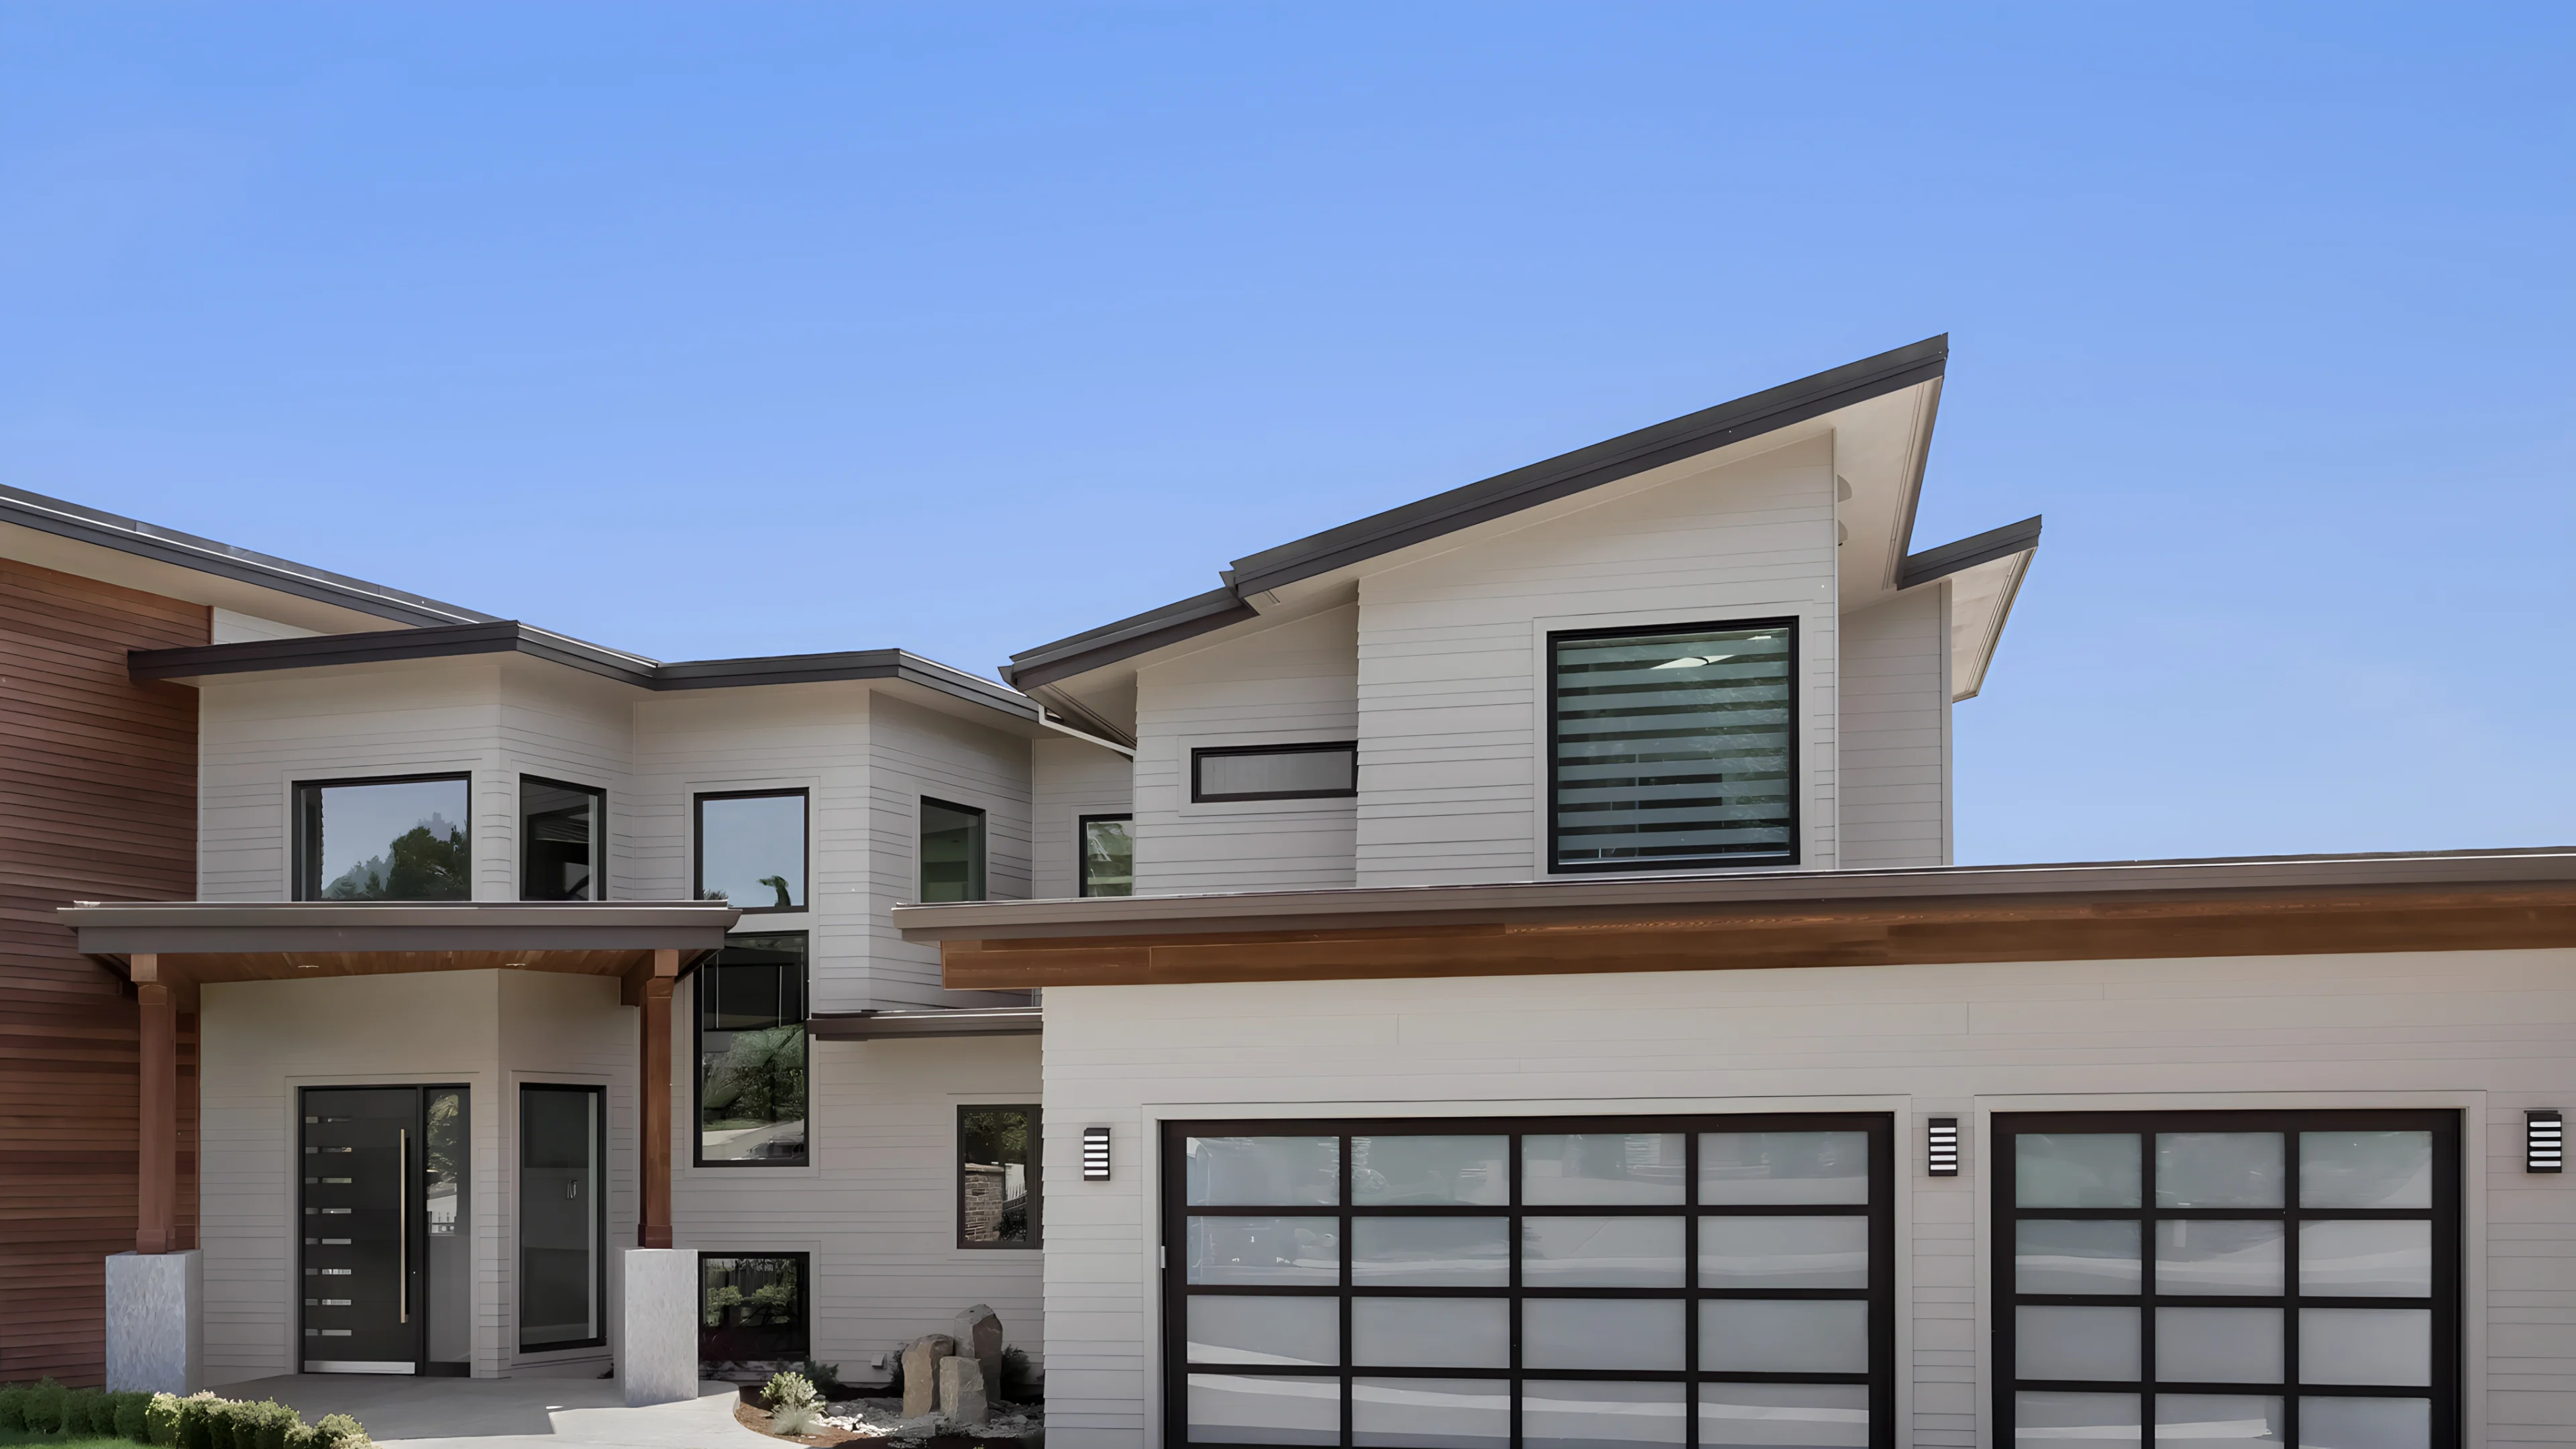 Home with angular roof and garage